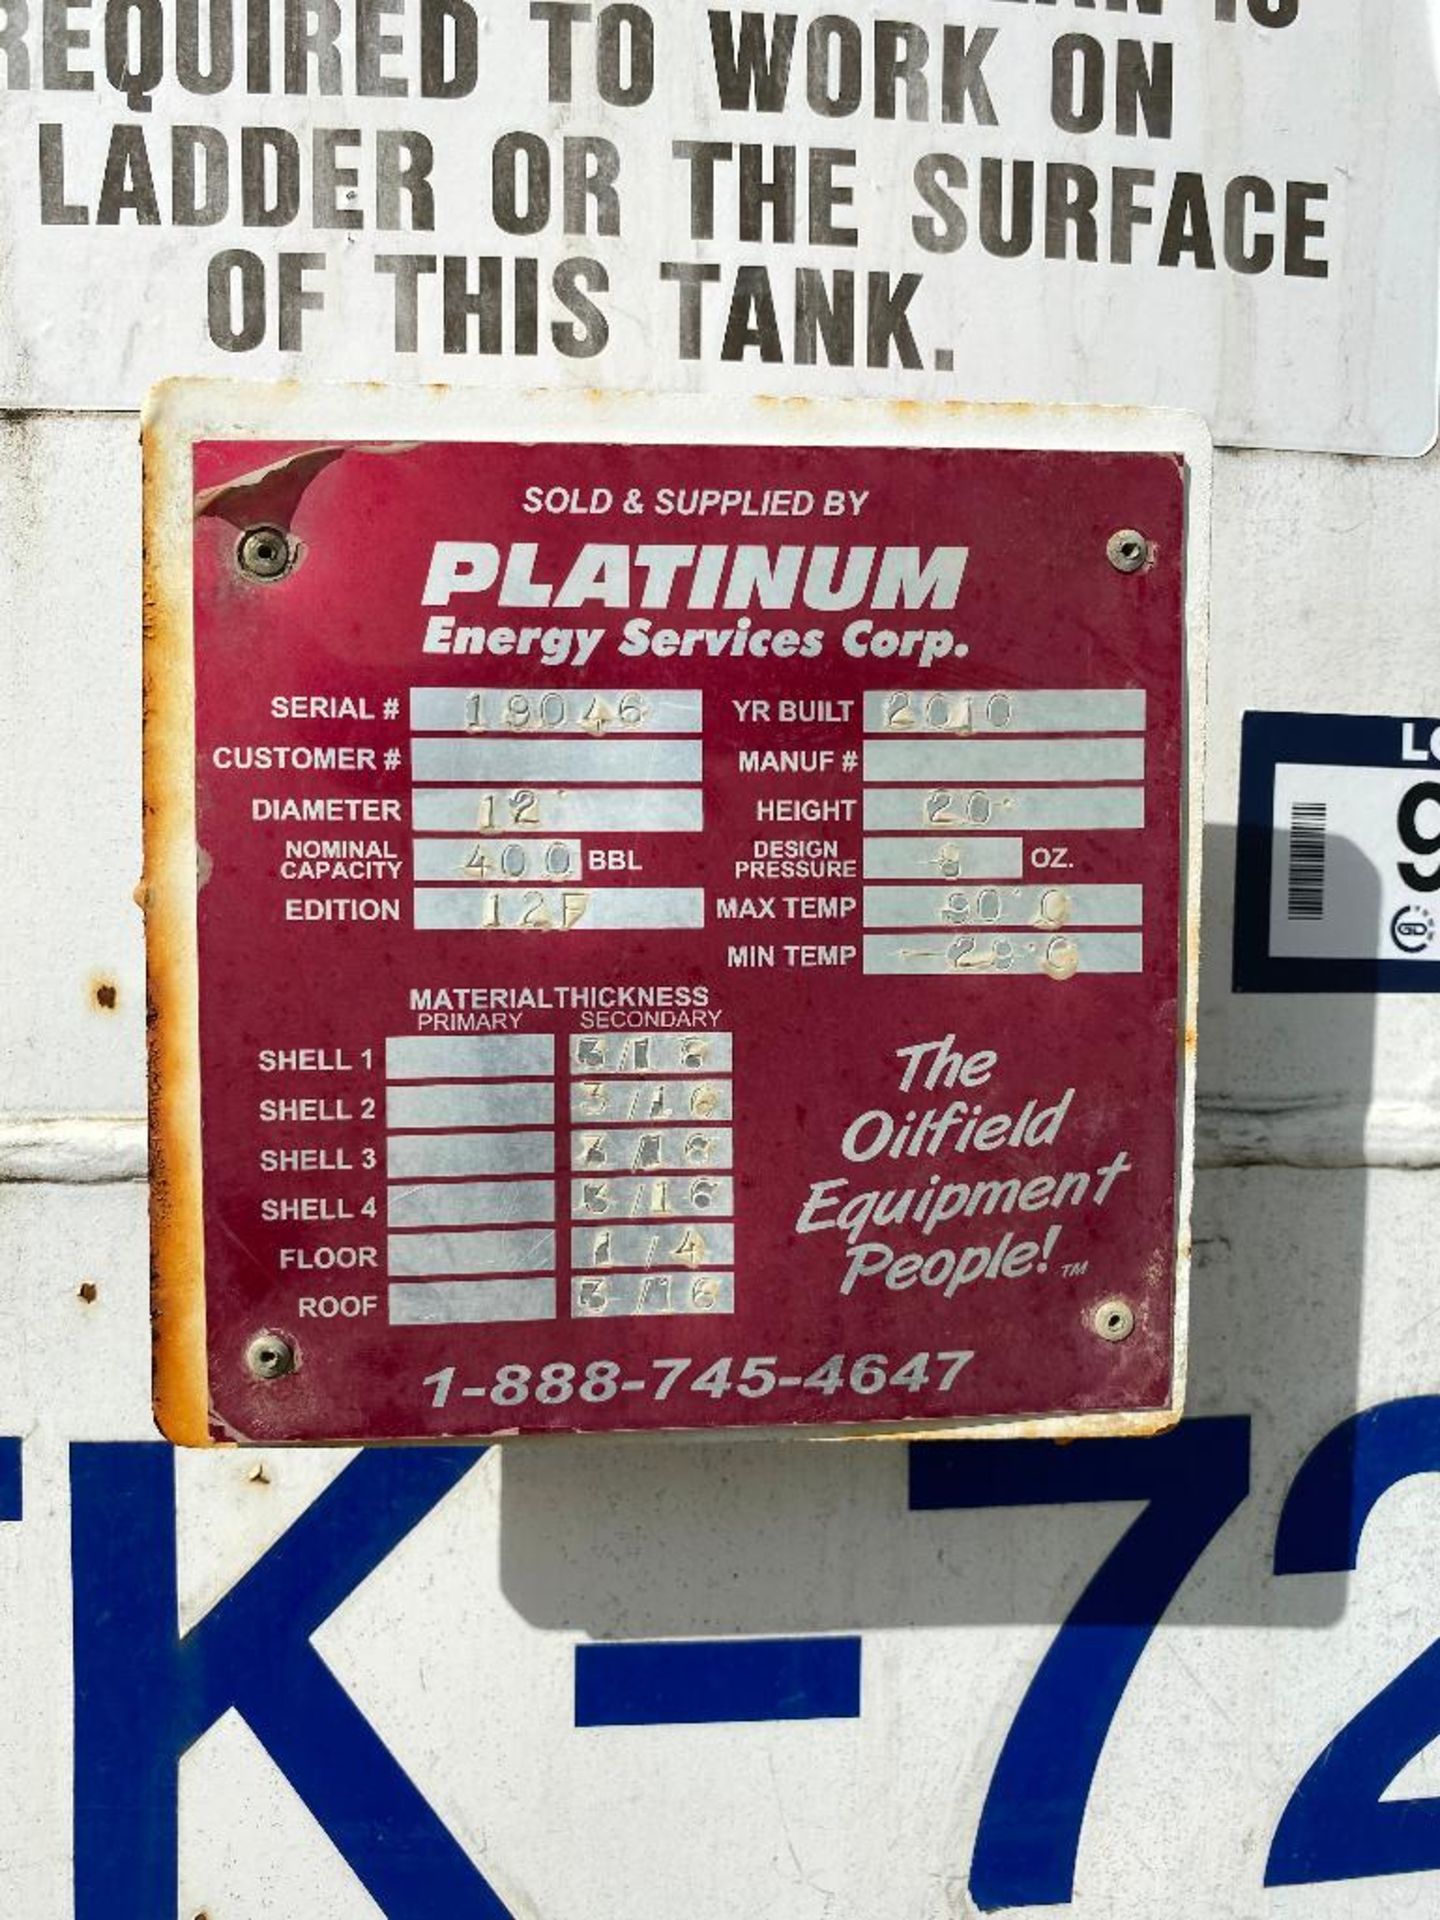 2010 Platinum Energy 20' X 12' 400BBL Tank Serial: 19046 - Image 2 of 2